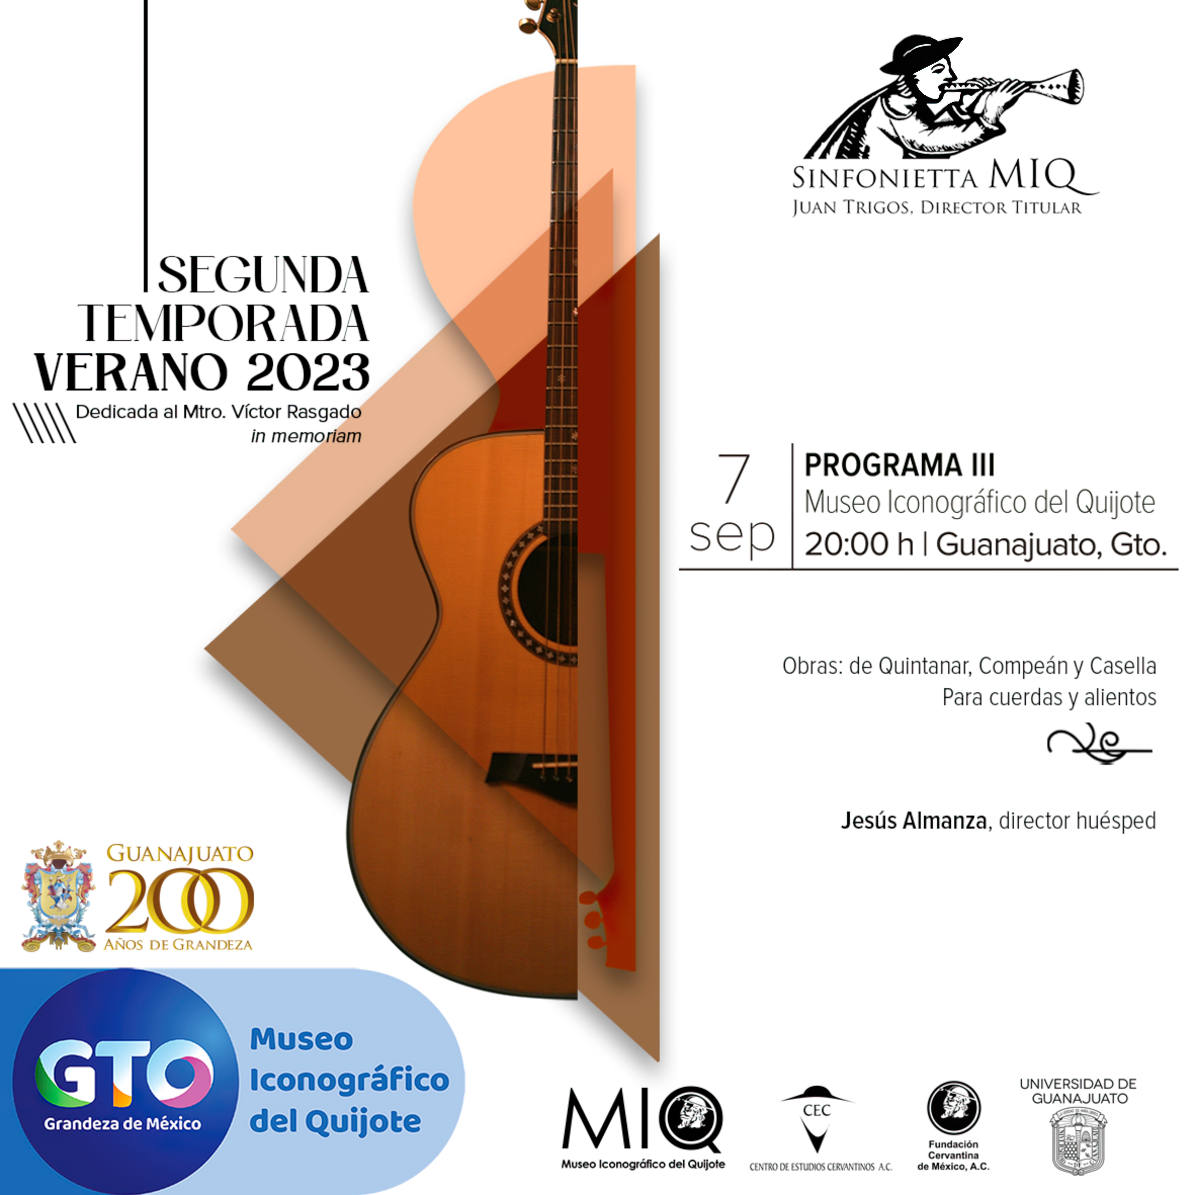 Programa Segunda Temporada - Verano 2023 - Sinfonietta MIQ